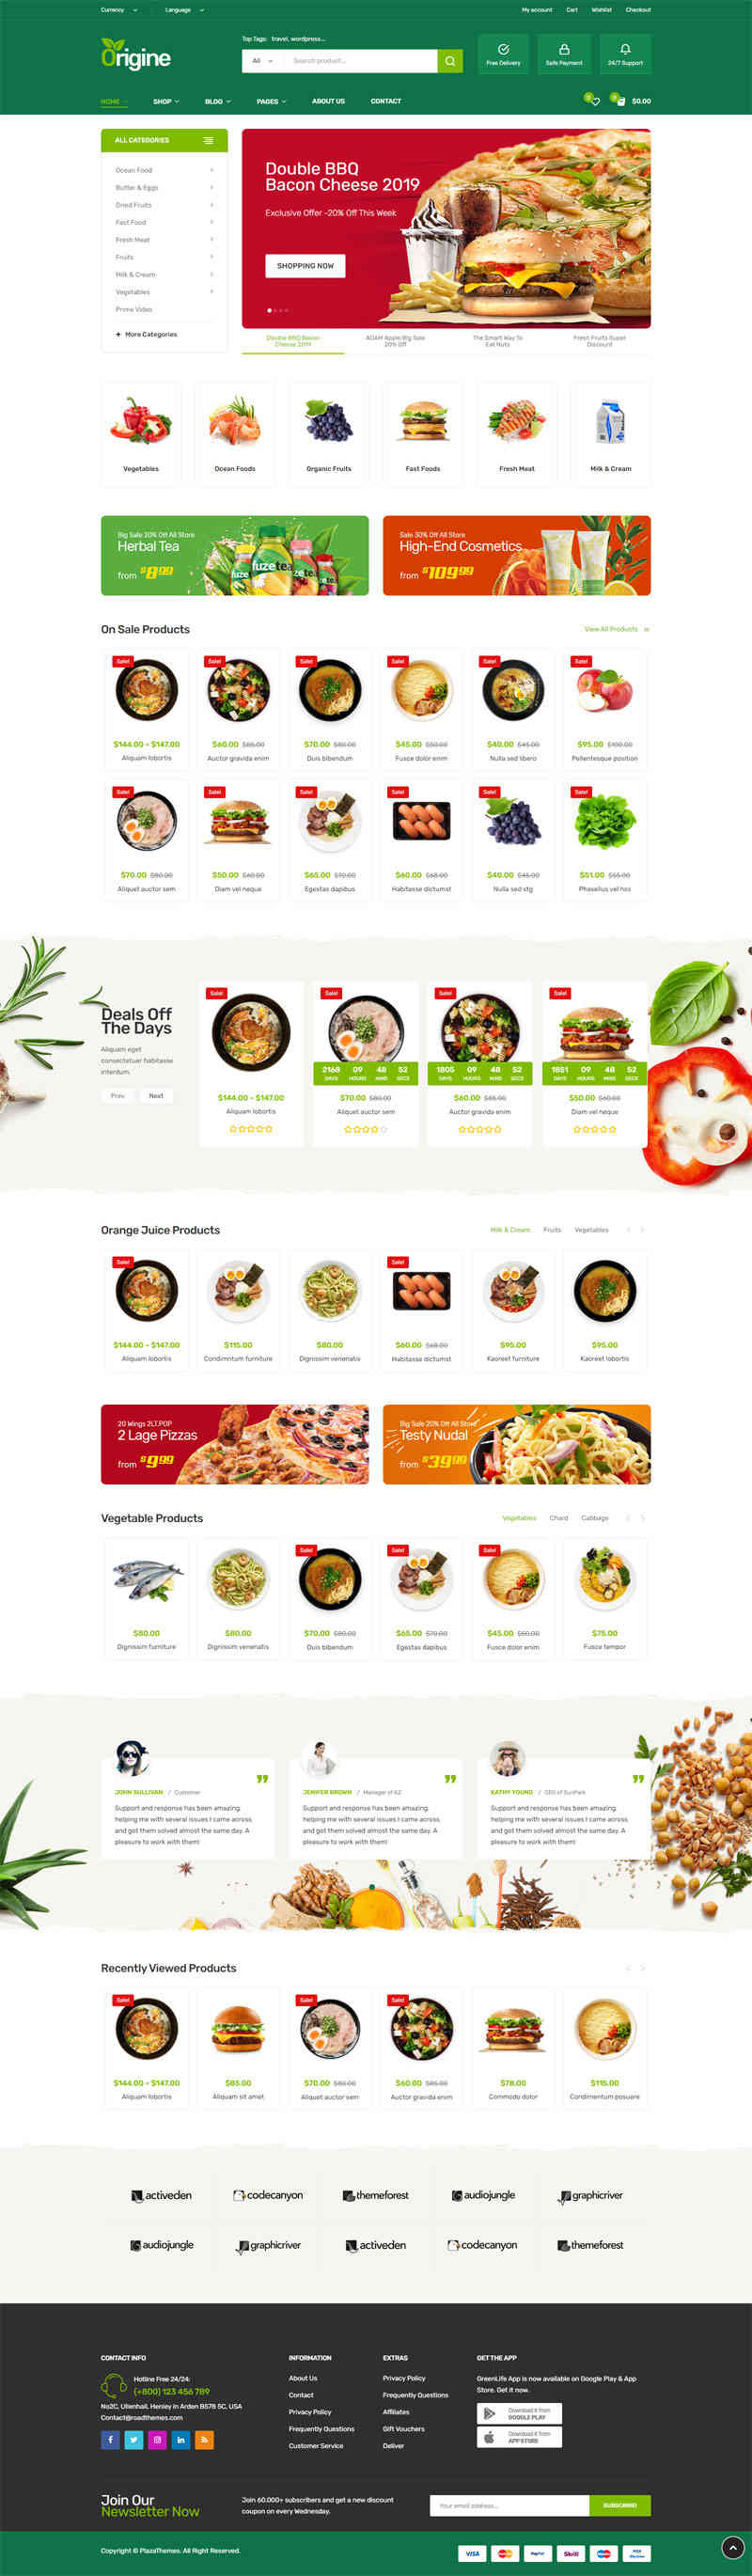 thiet ke website tmi organic food 150031